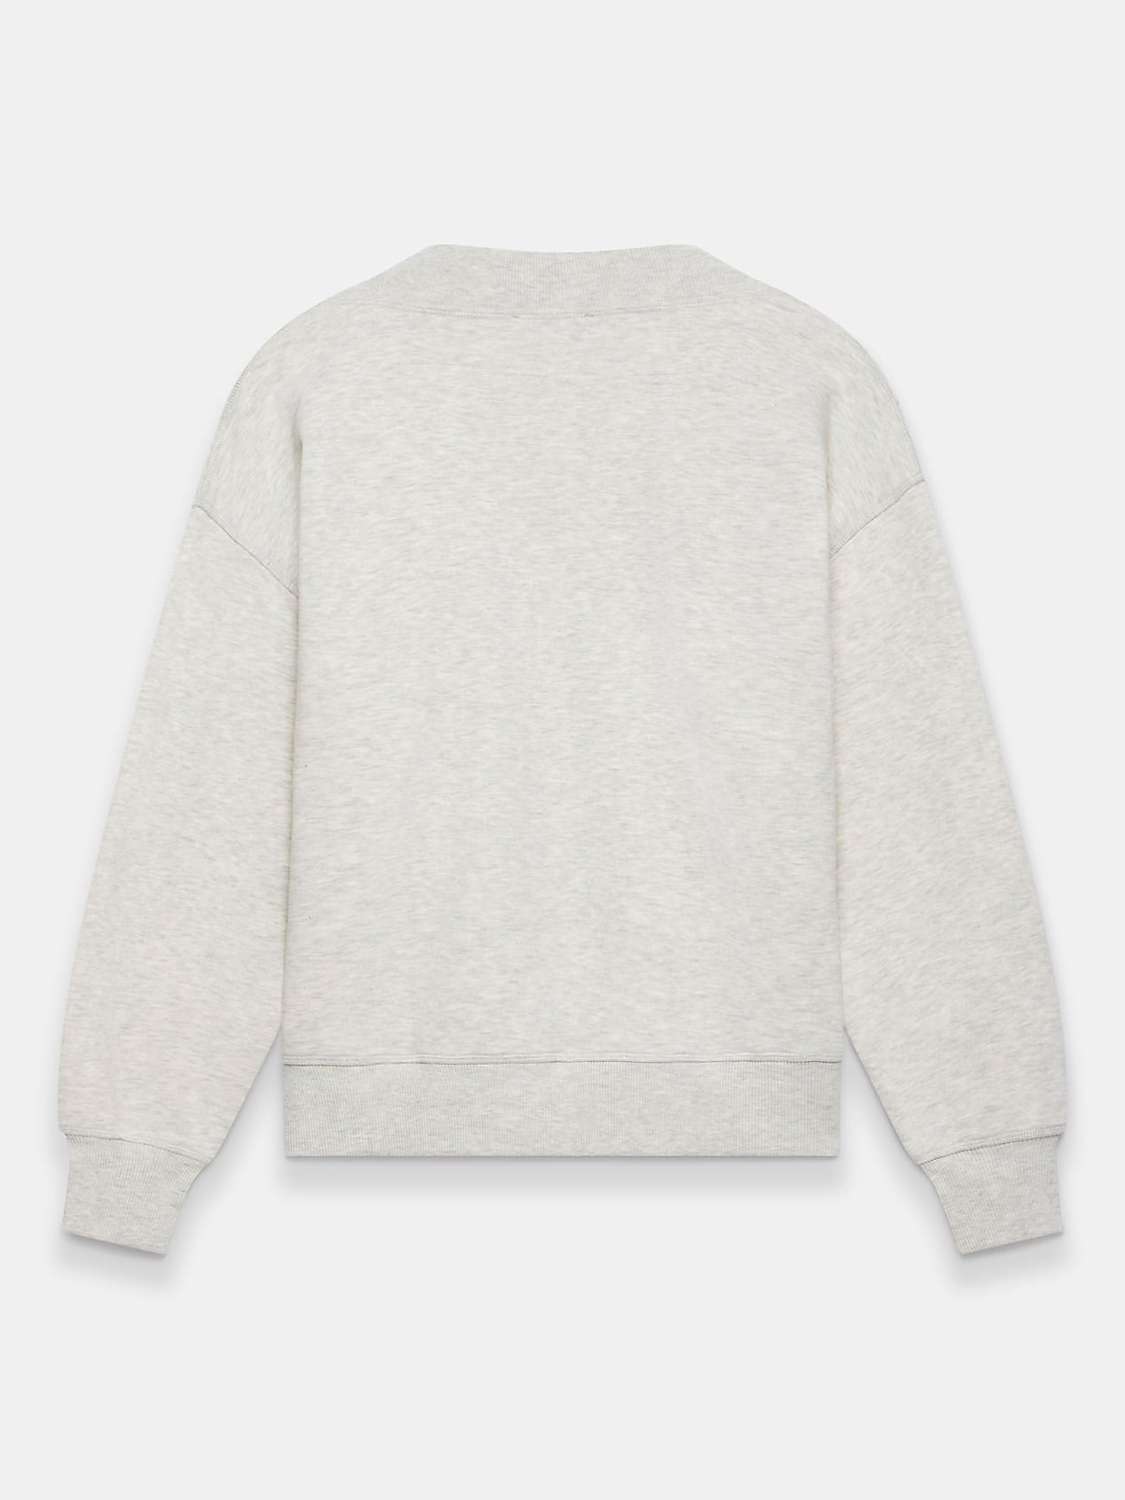 Buy Mint Velvet High Neck Sweatshirt, Light Grey Online at johnlewis.com